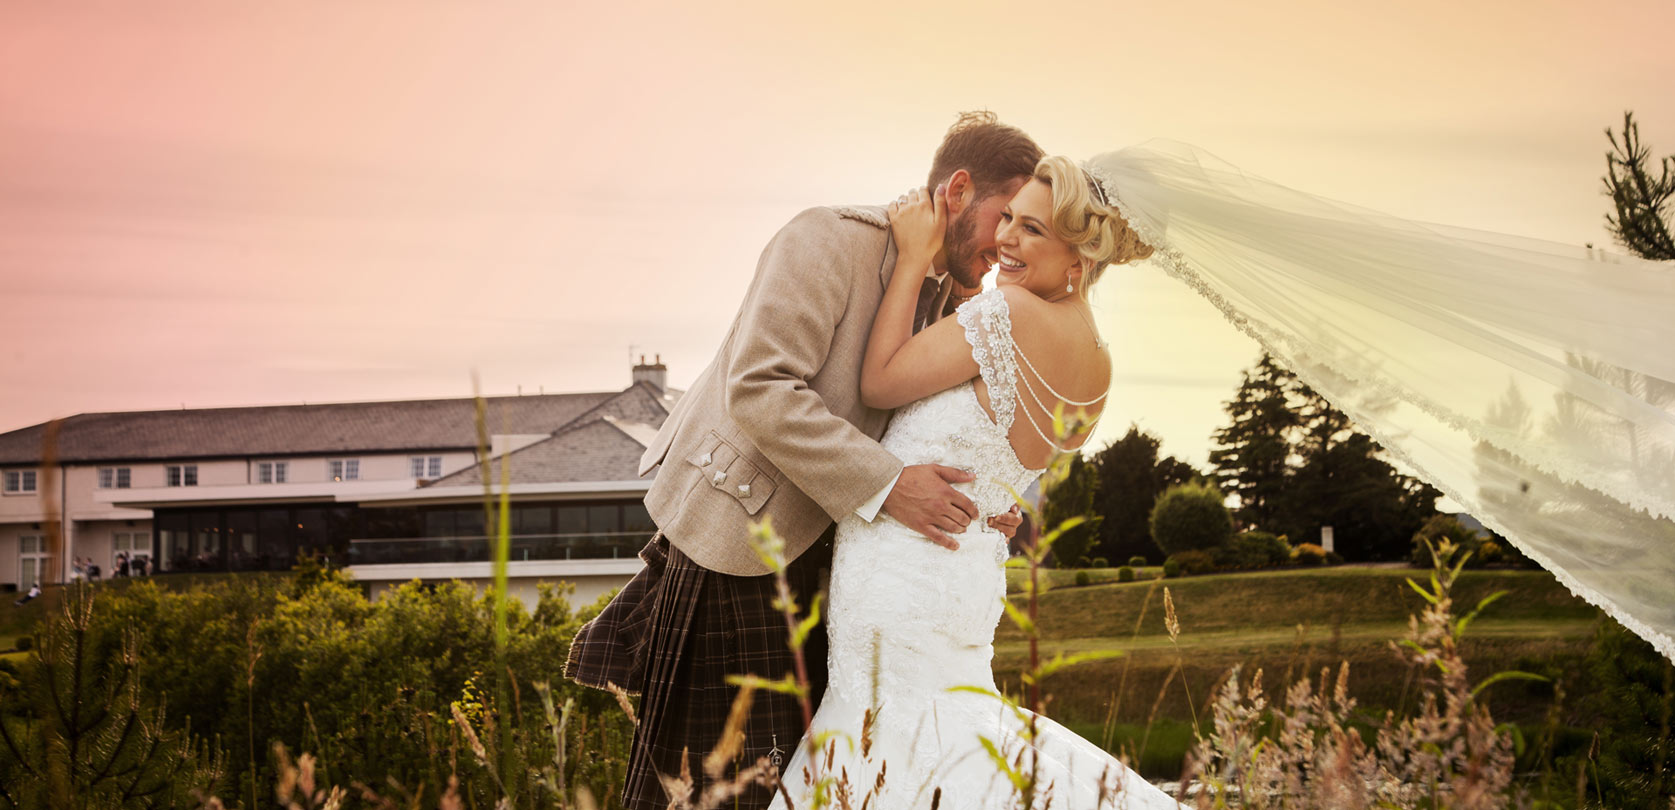 Wedding photography for Scotland